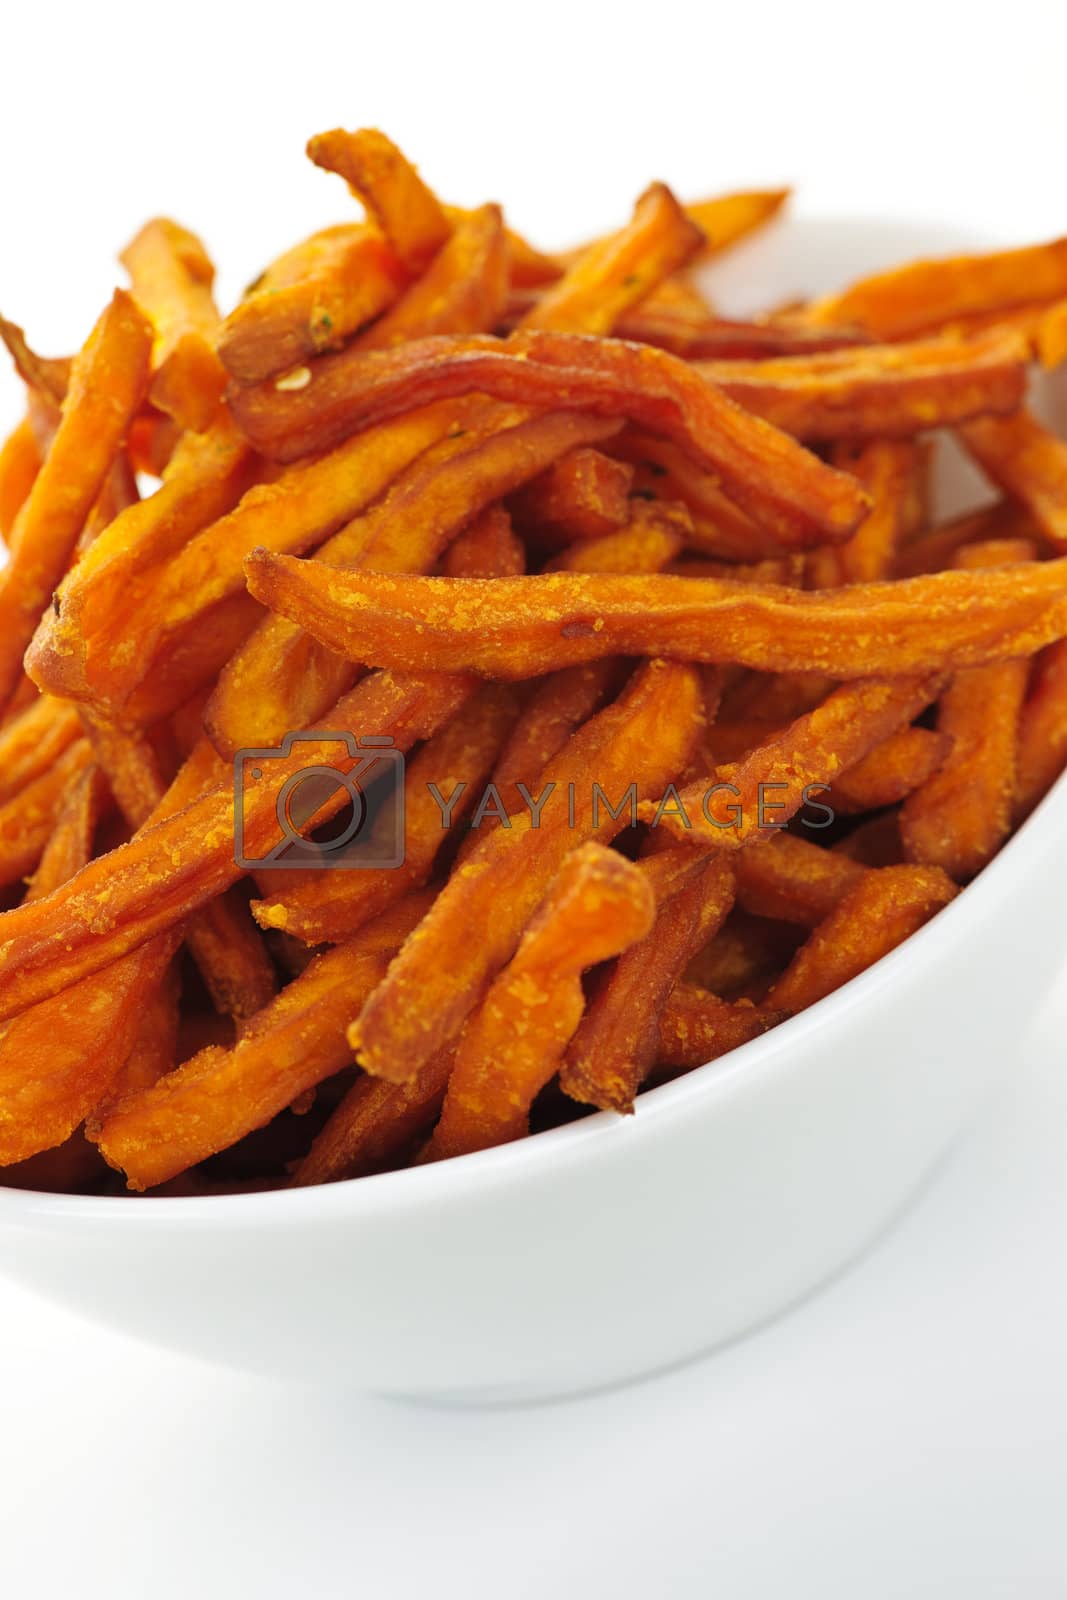 Royalty free image of Sweet potato fries by elenathewise